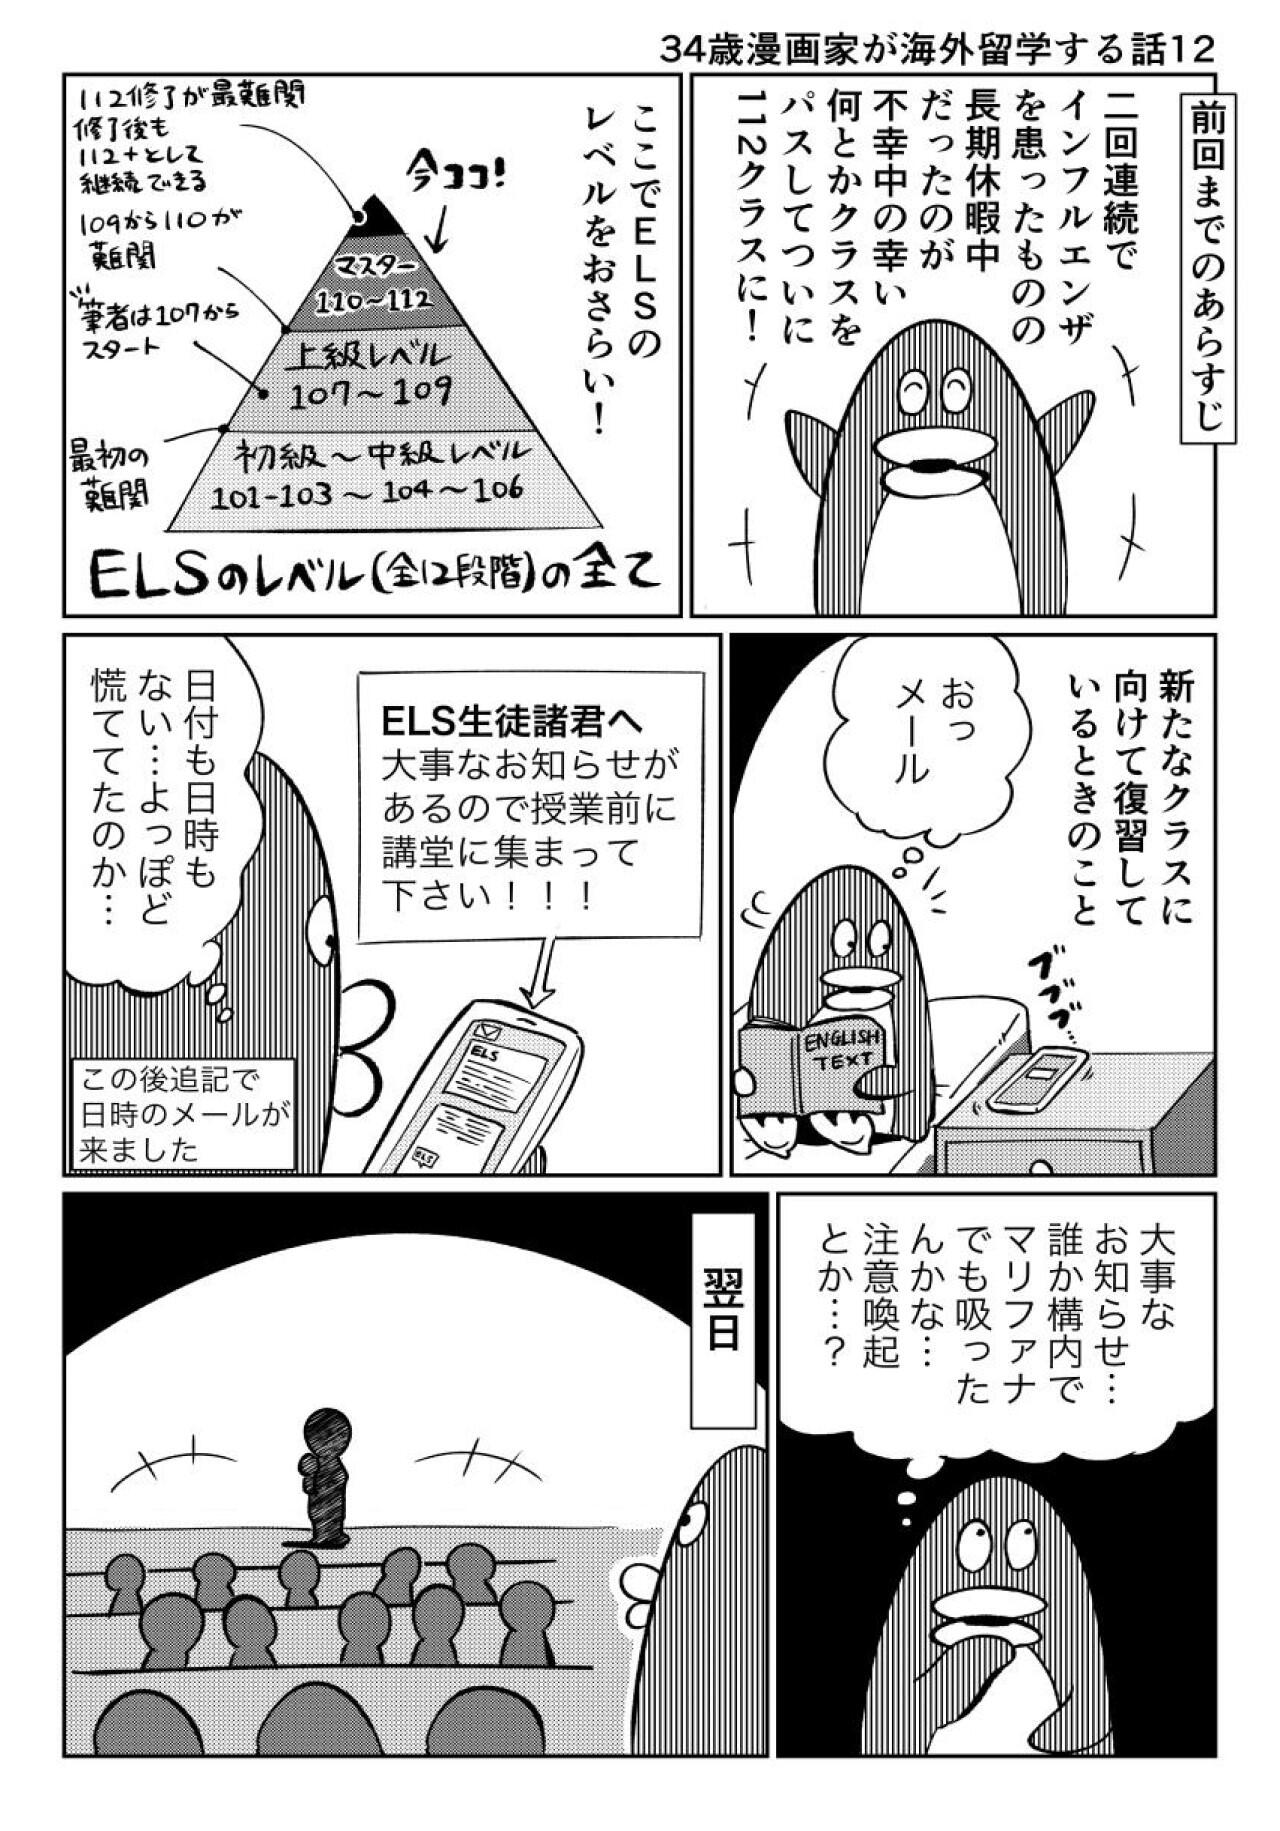 https://www.ryugaku.co.jp/column/images/34sai12_1_1280.jpg